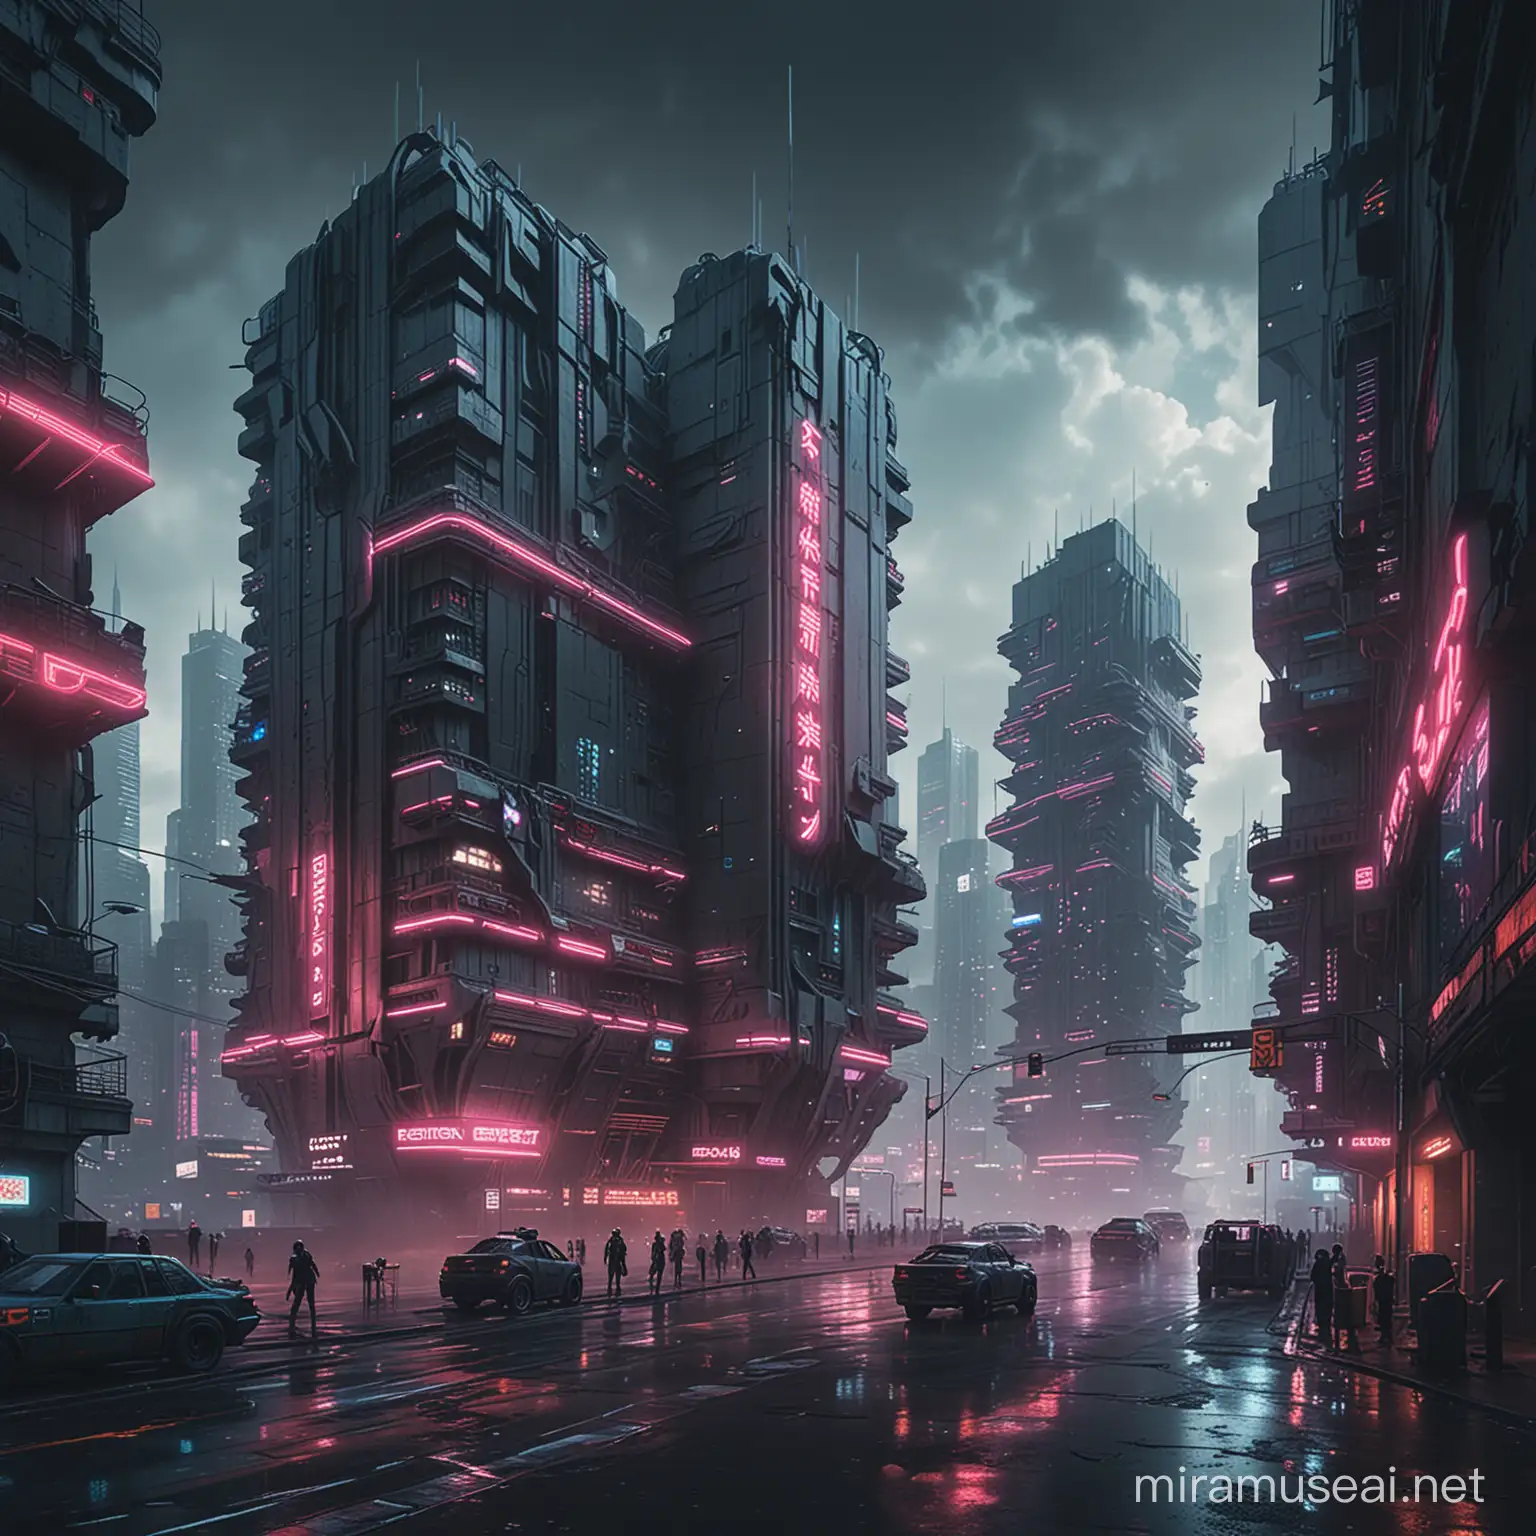 Cyberpunk Cityscape with Futuristic Brutalist Architecture and Neon Lights